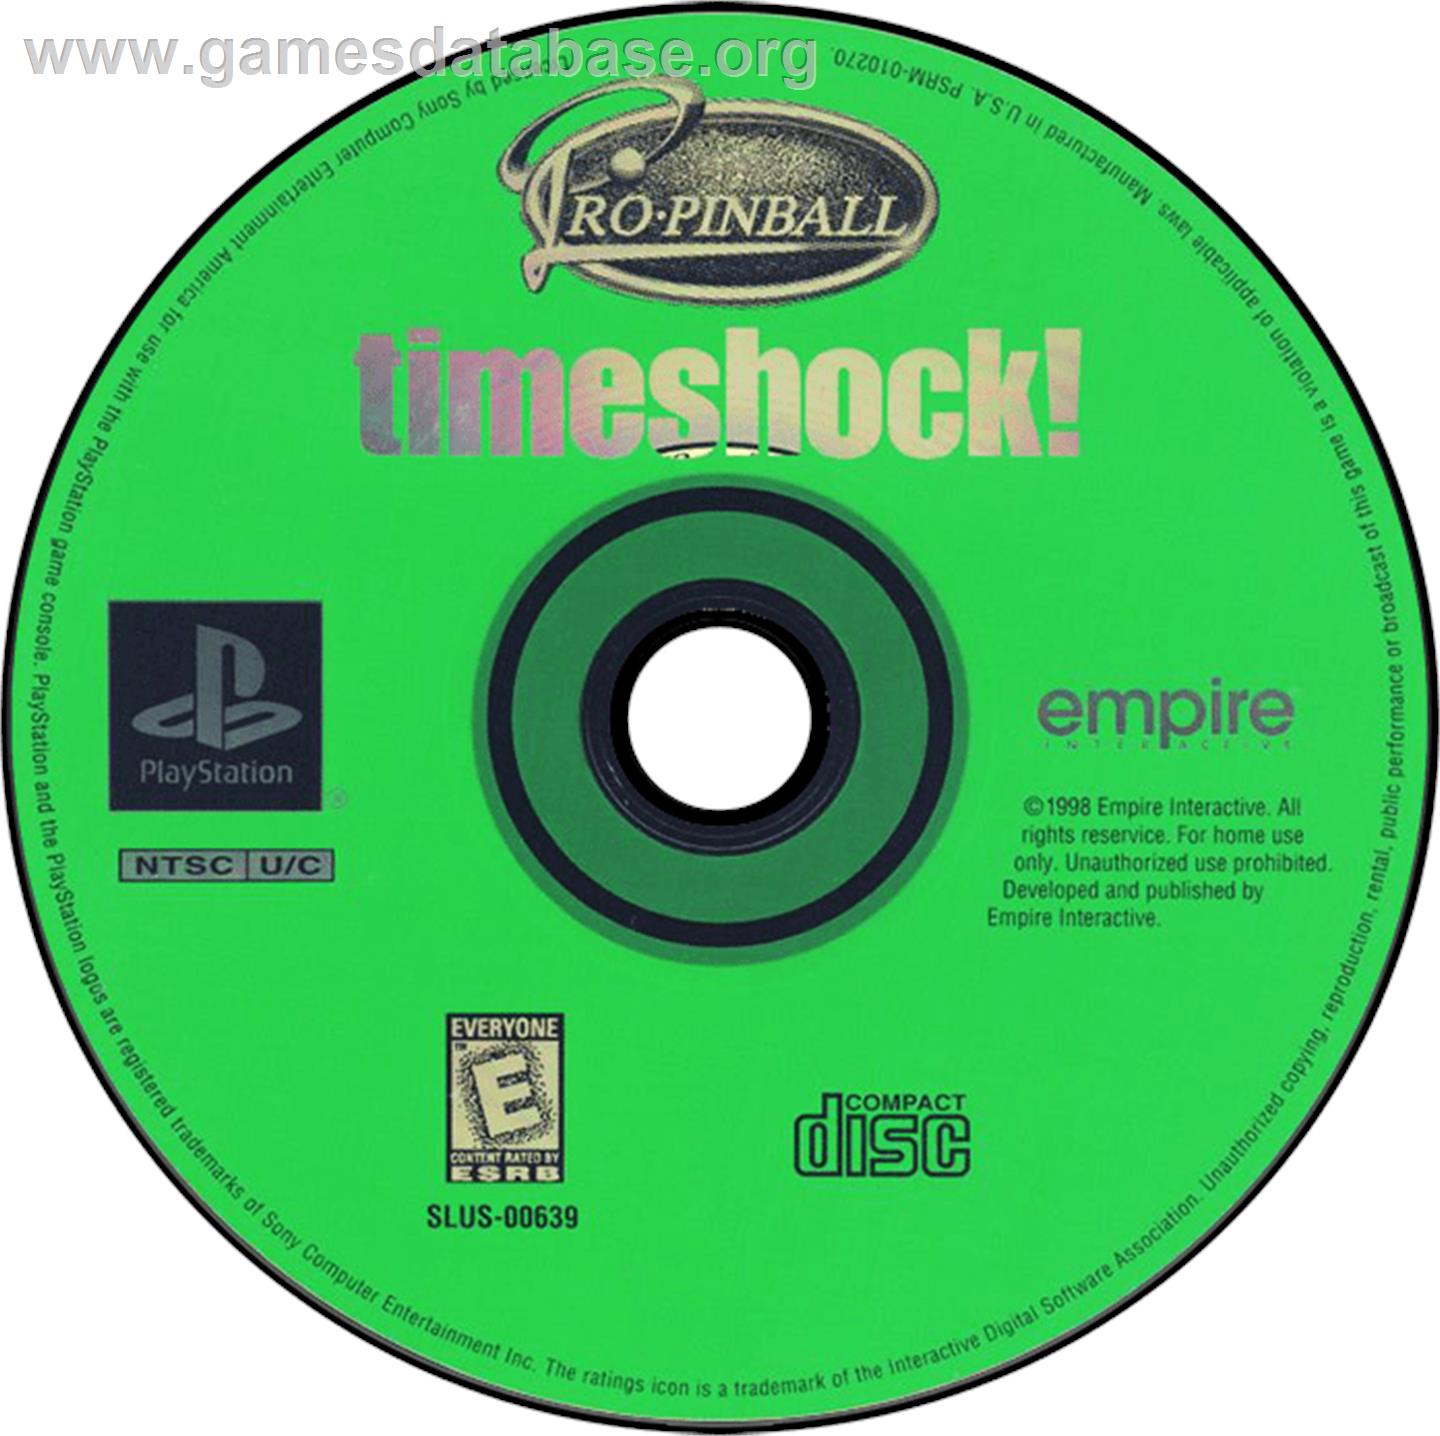 Pro Pinball: Timeshock! - Sony Playstation - Artwork - Disc